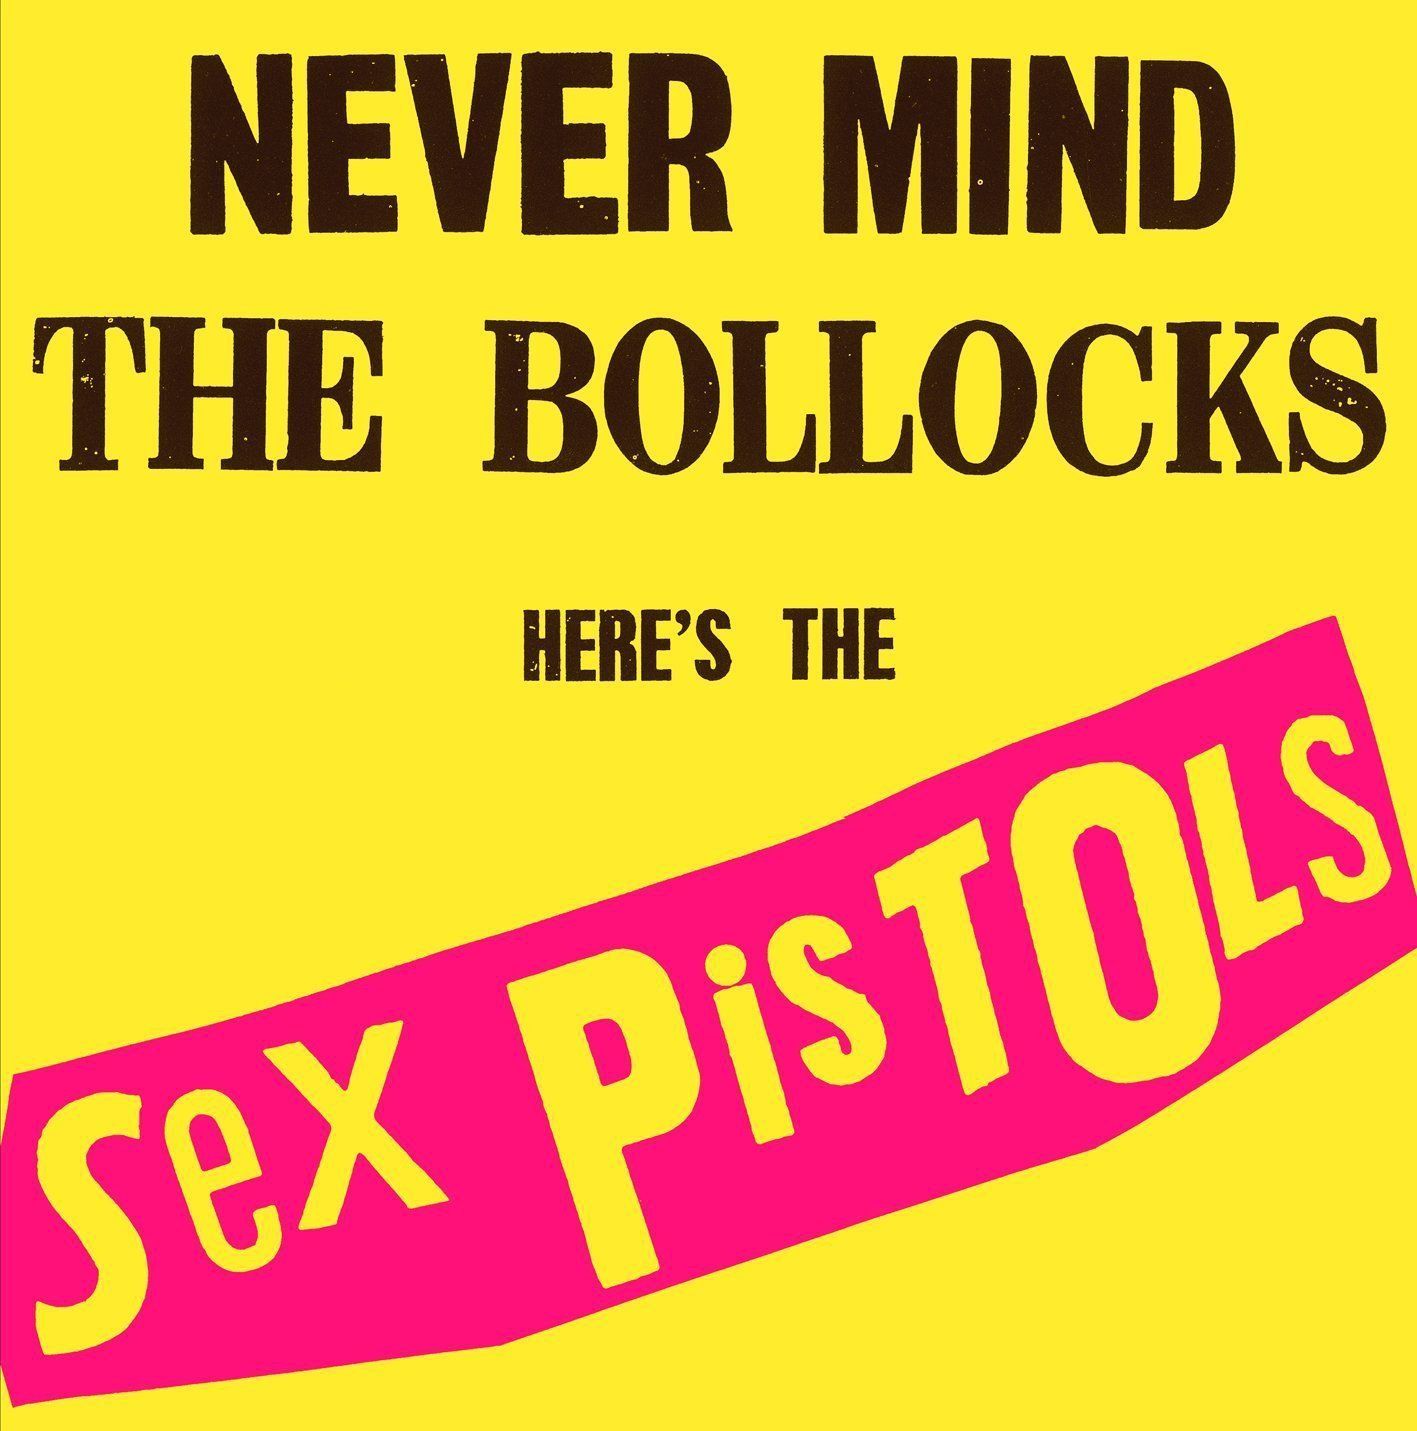 SEX PISTOLS - NEVER MIND THE BOLLOCKS HERE'S THE SEX PISTOLS (1977) - LP 2014 EDITION SIFIR PLAK